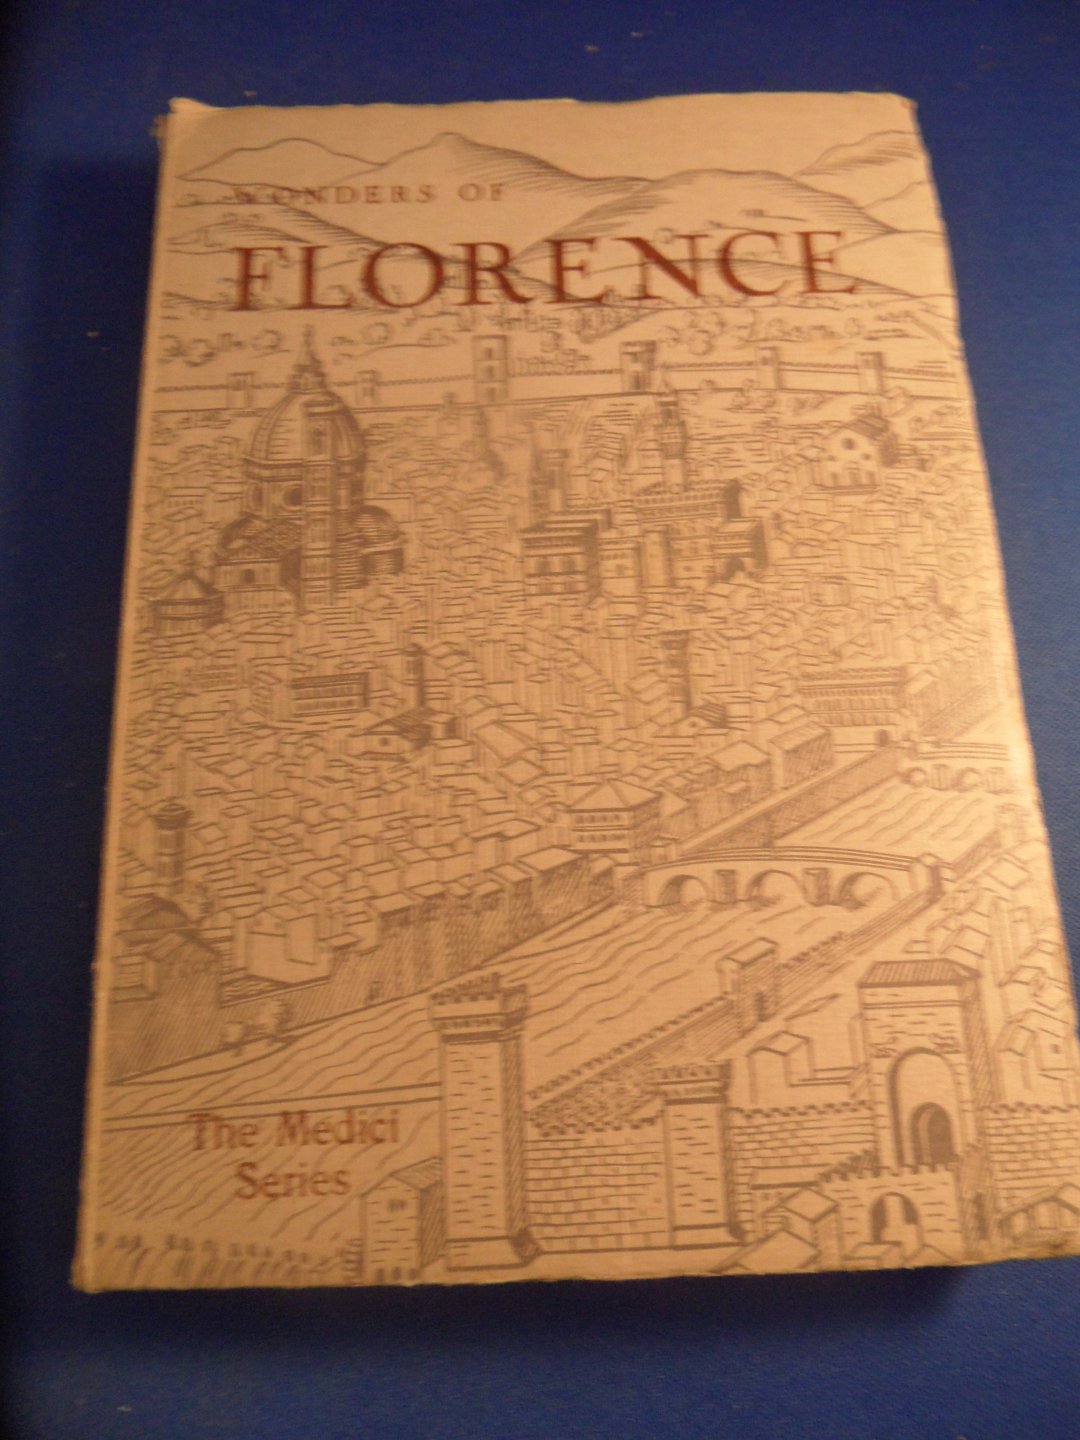 Fattorusso, J. - Wonders of Florence